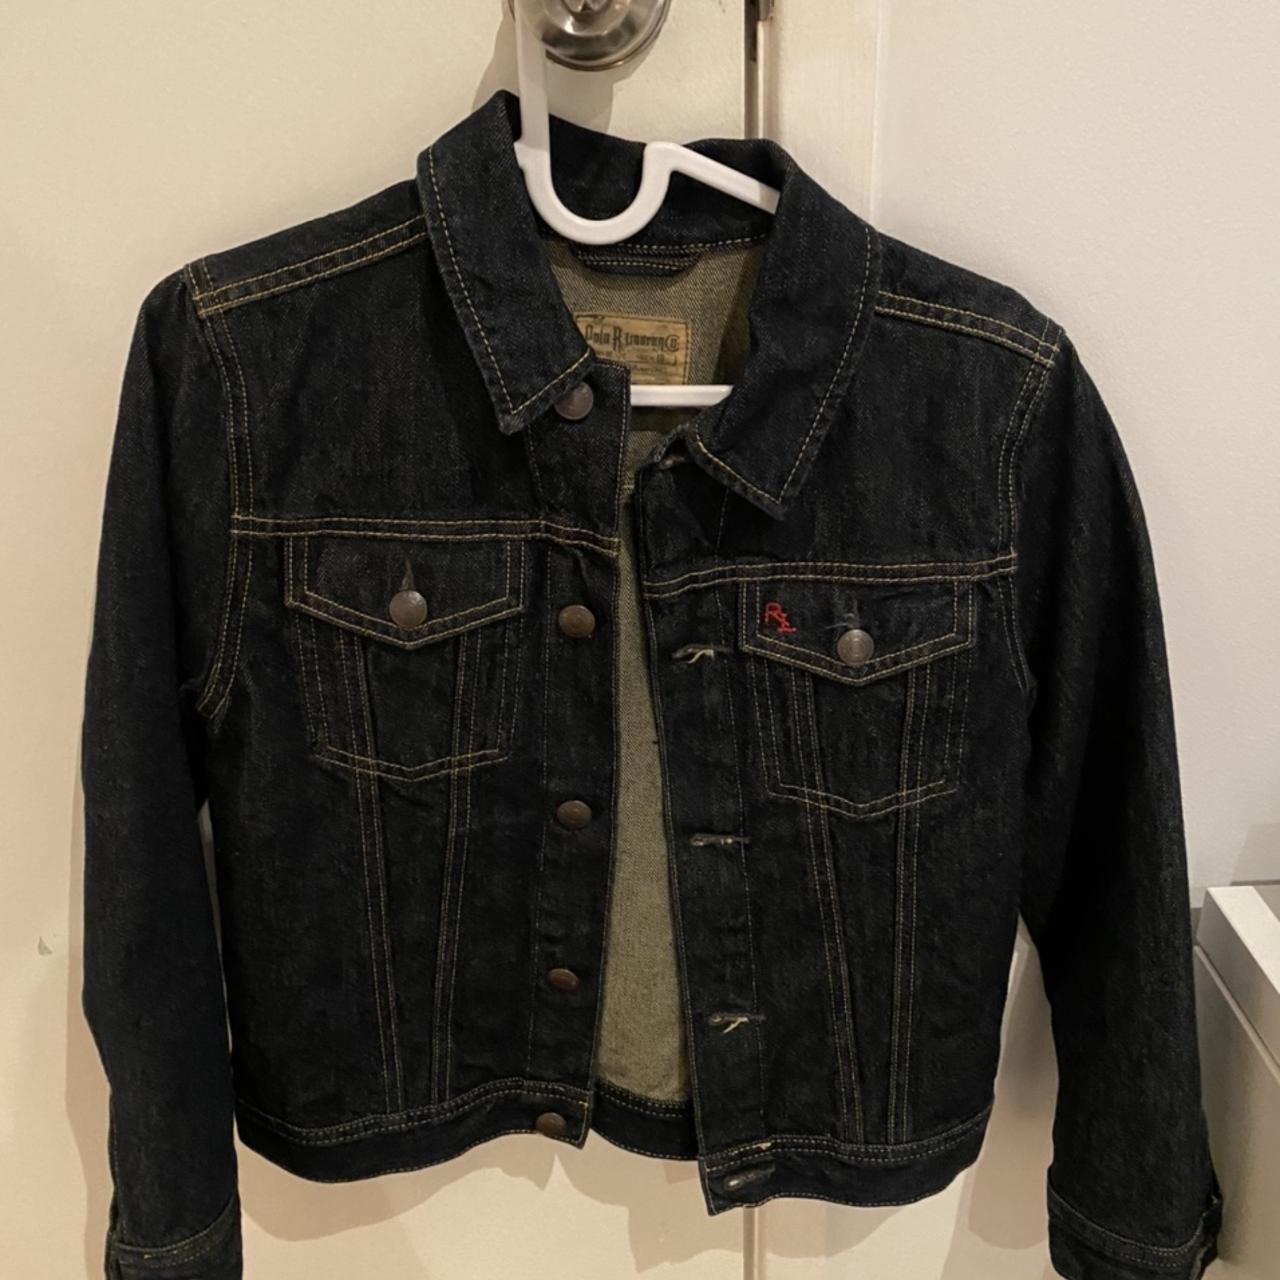 Vintage Ralph Lauren denim jacket!! Size 10 but I’m... - Depop